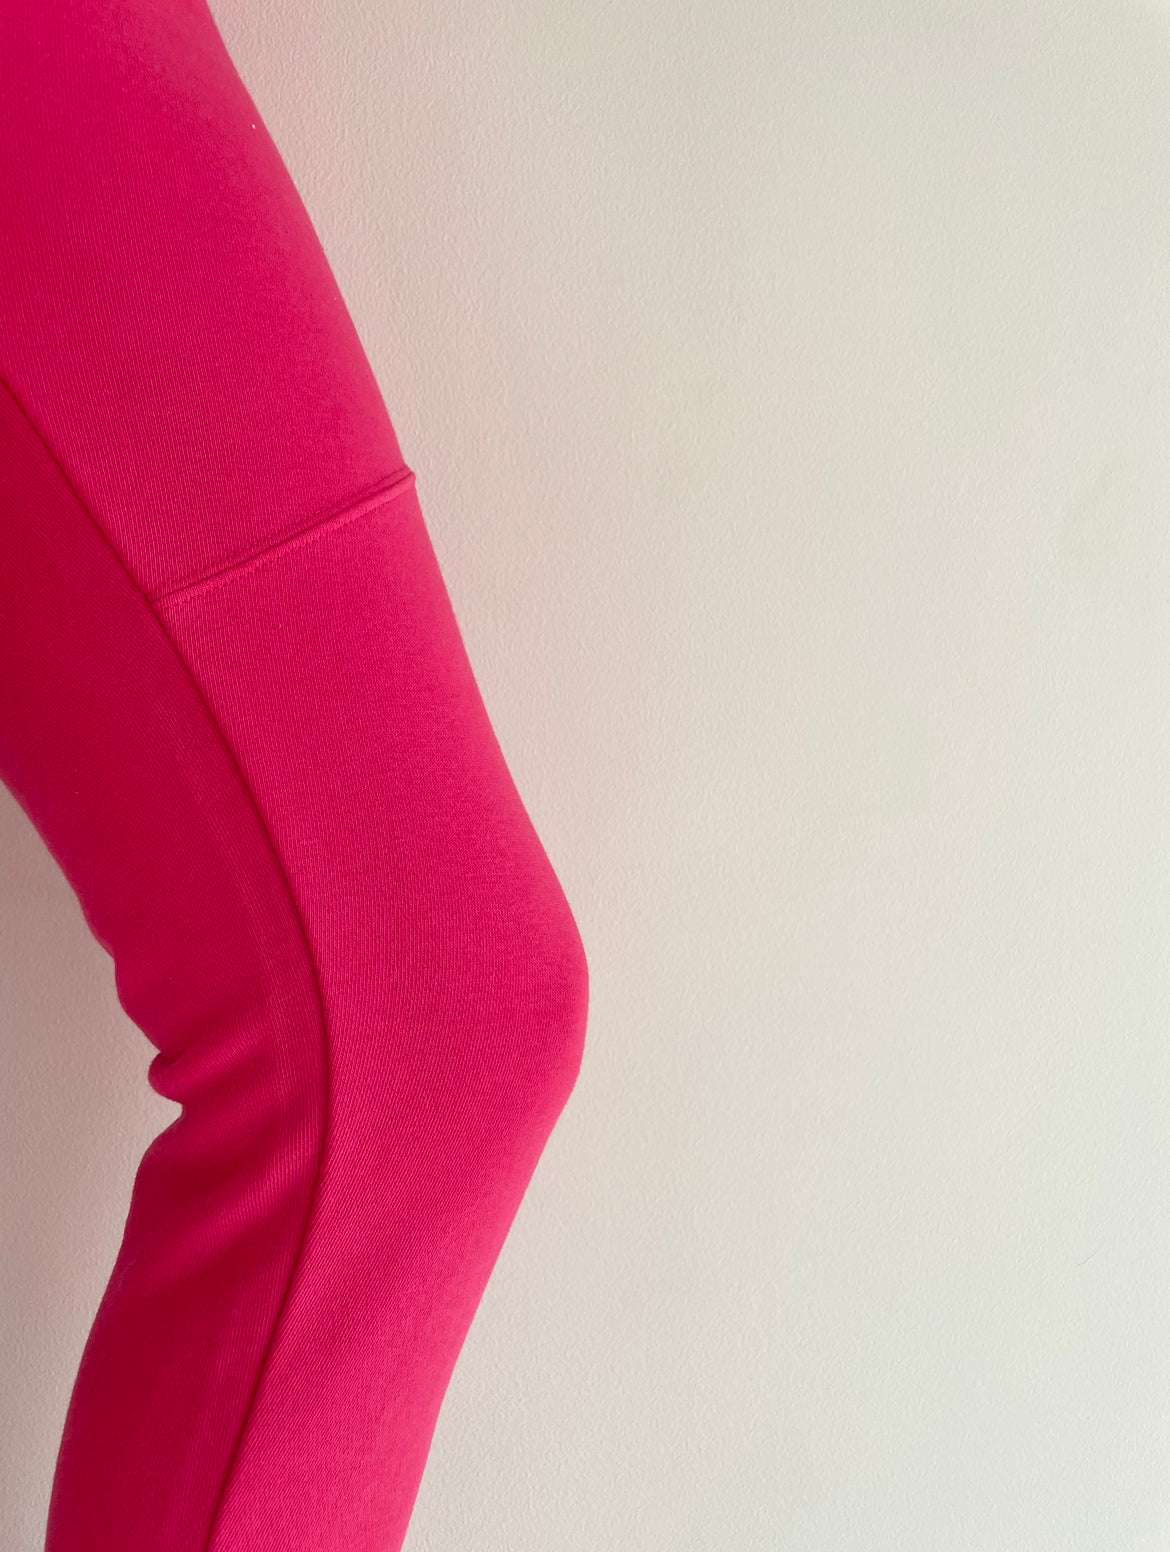 the skinny sweatpants in fuchsia pink